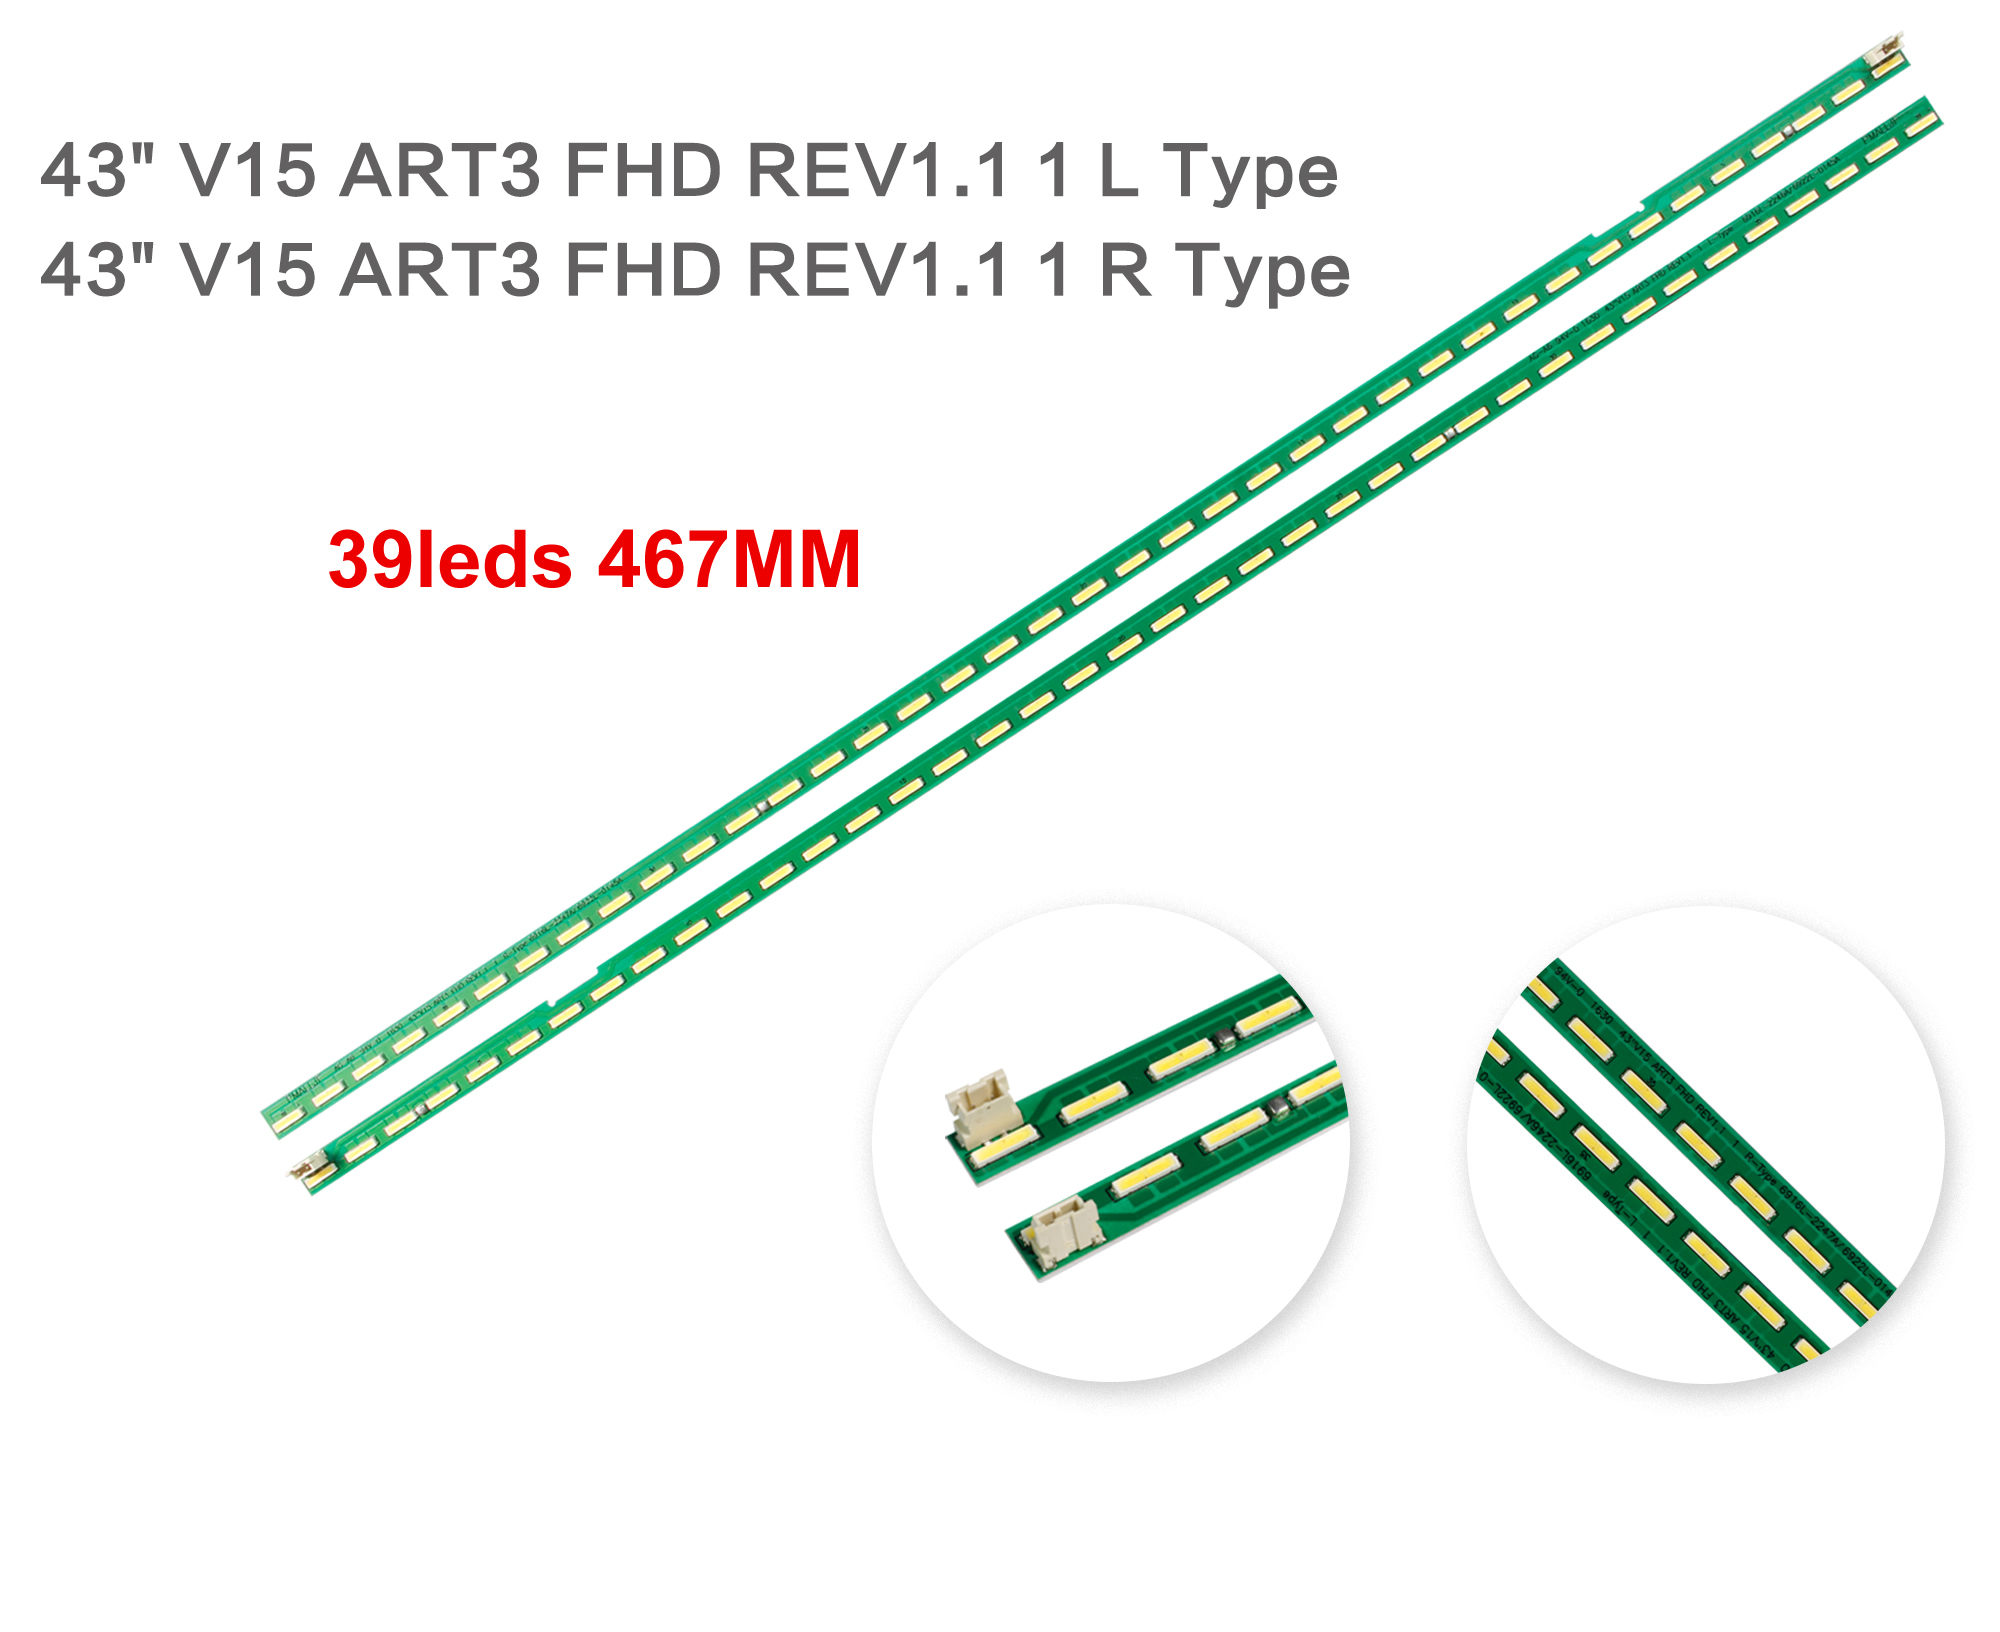 43" V15 ART3 FHD REV1.1 39leds 1pair led strip